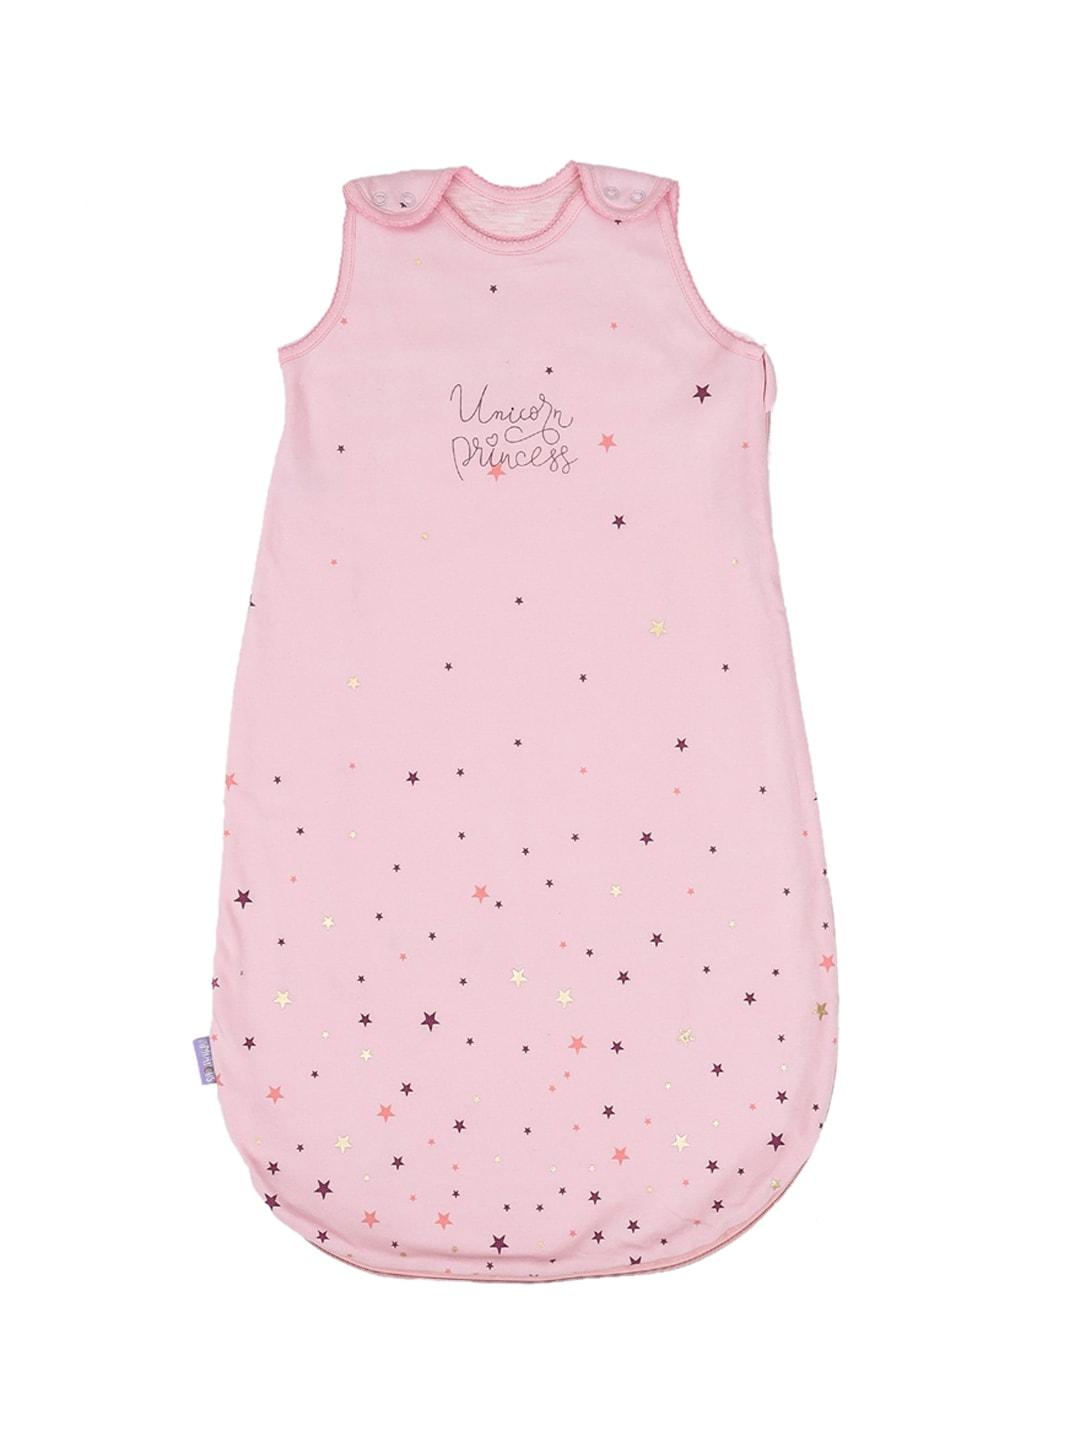 miarcus-infants-pink-printed-pure-cotton-sleeping-bag